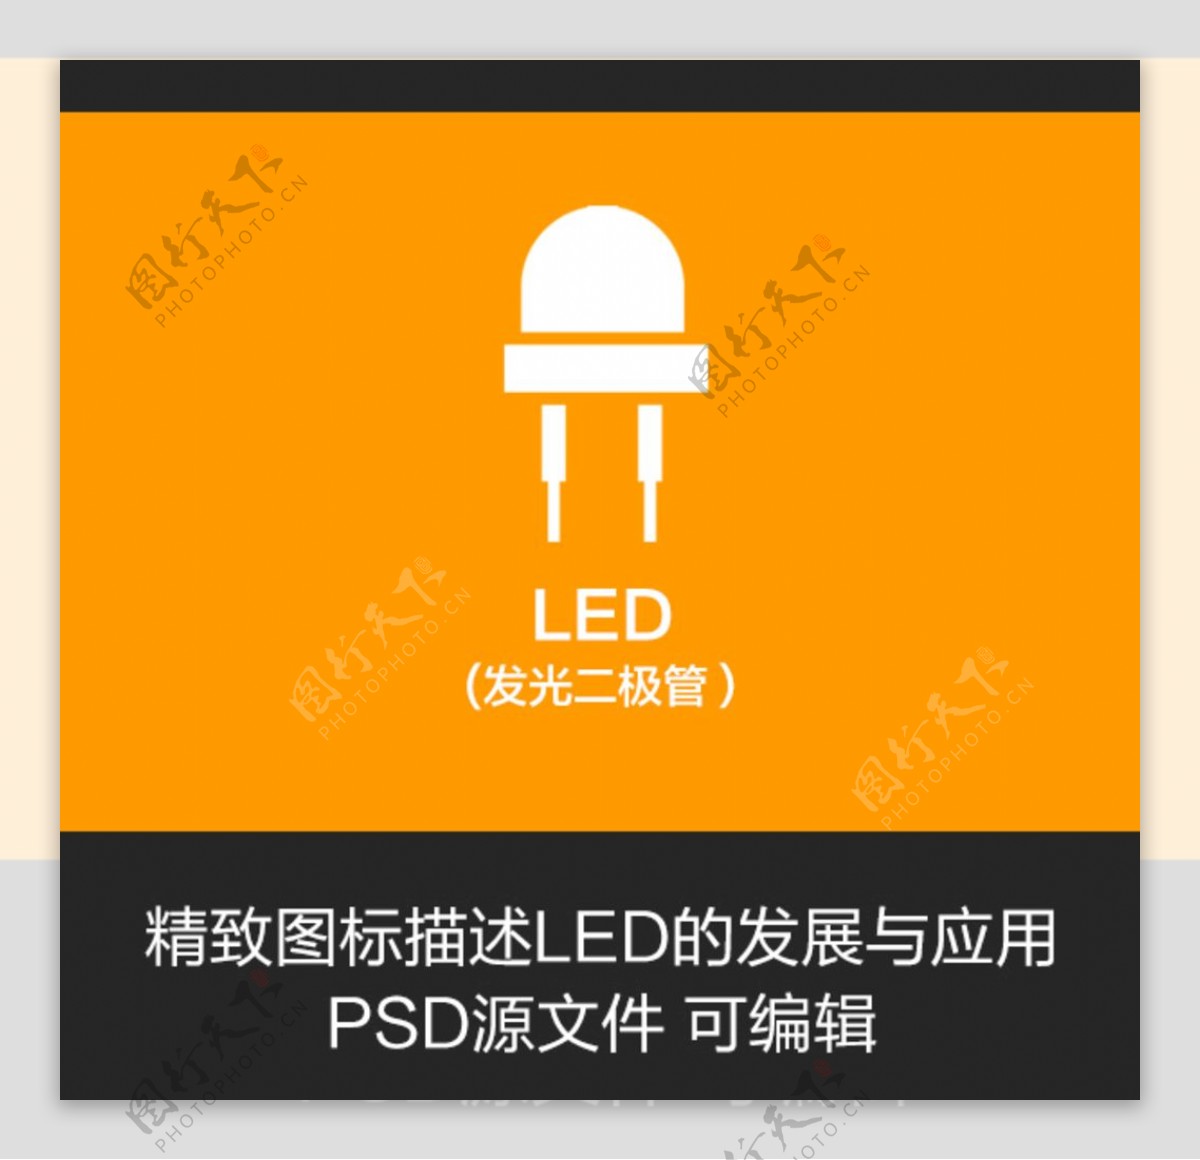 LED知识快速浏览